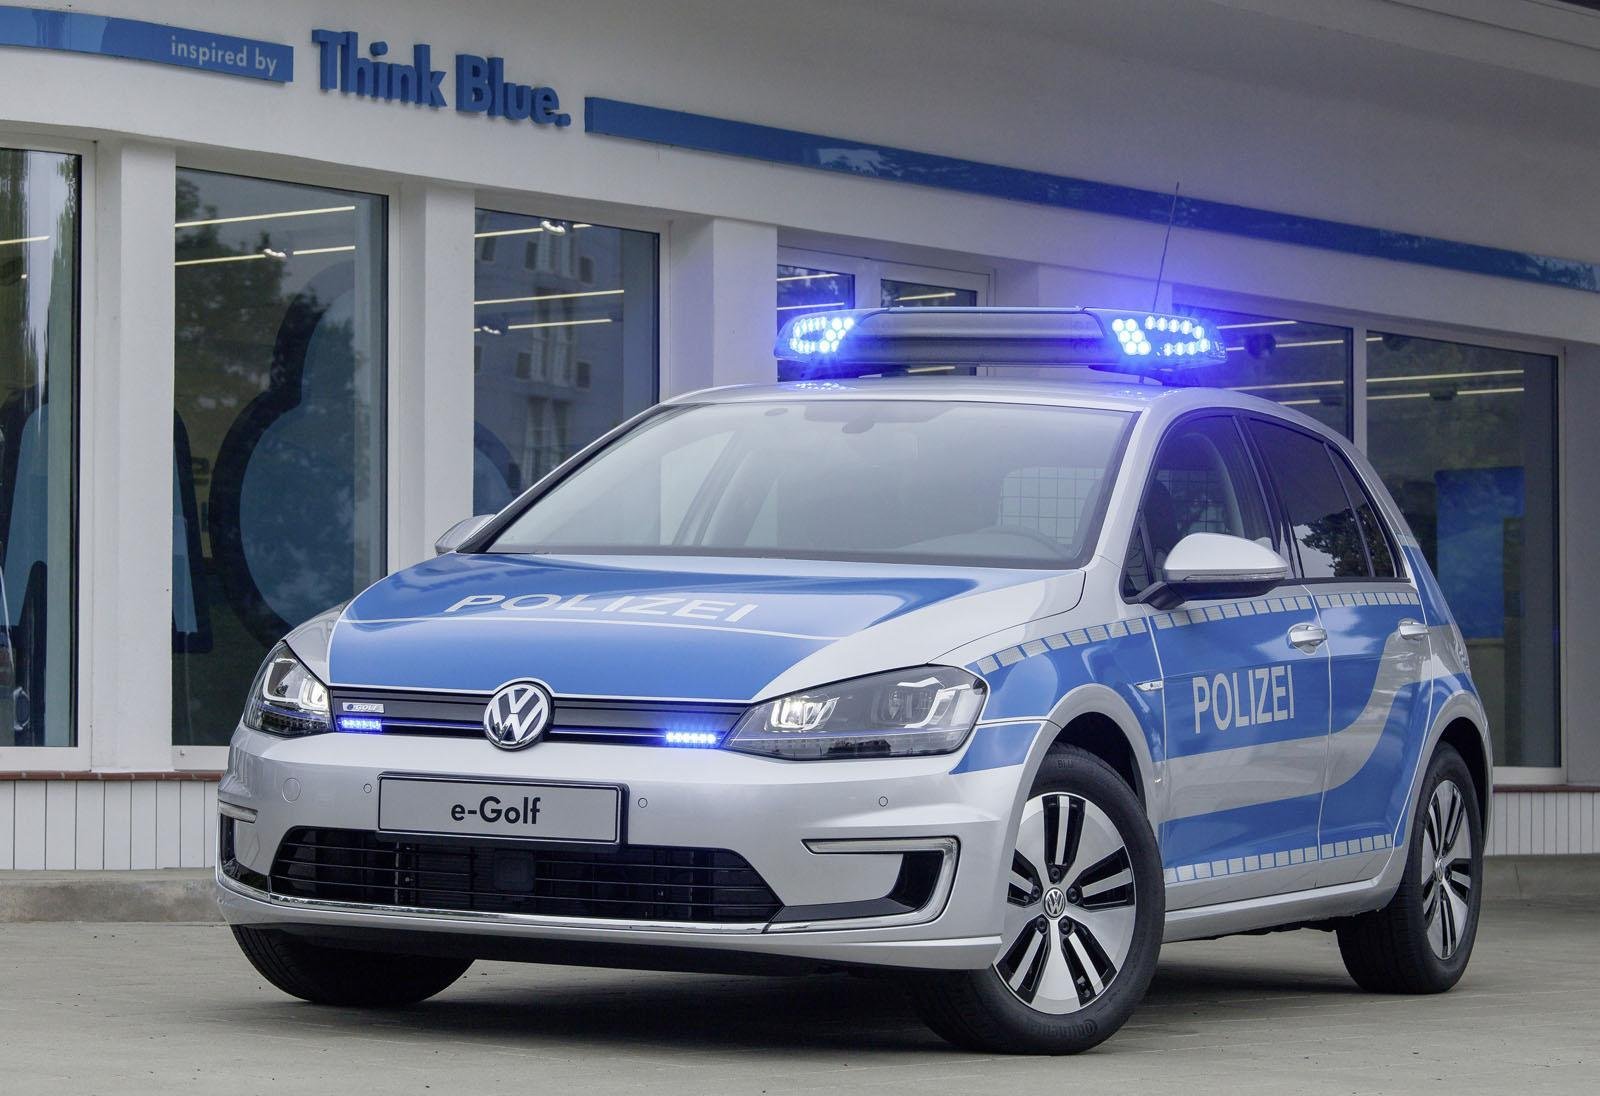 2014, Volkswagen, E golf, Police, Cars Wallpaper